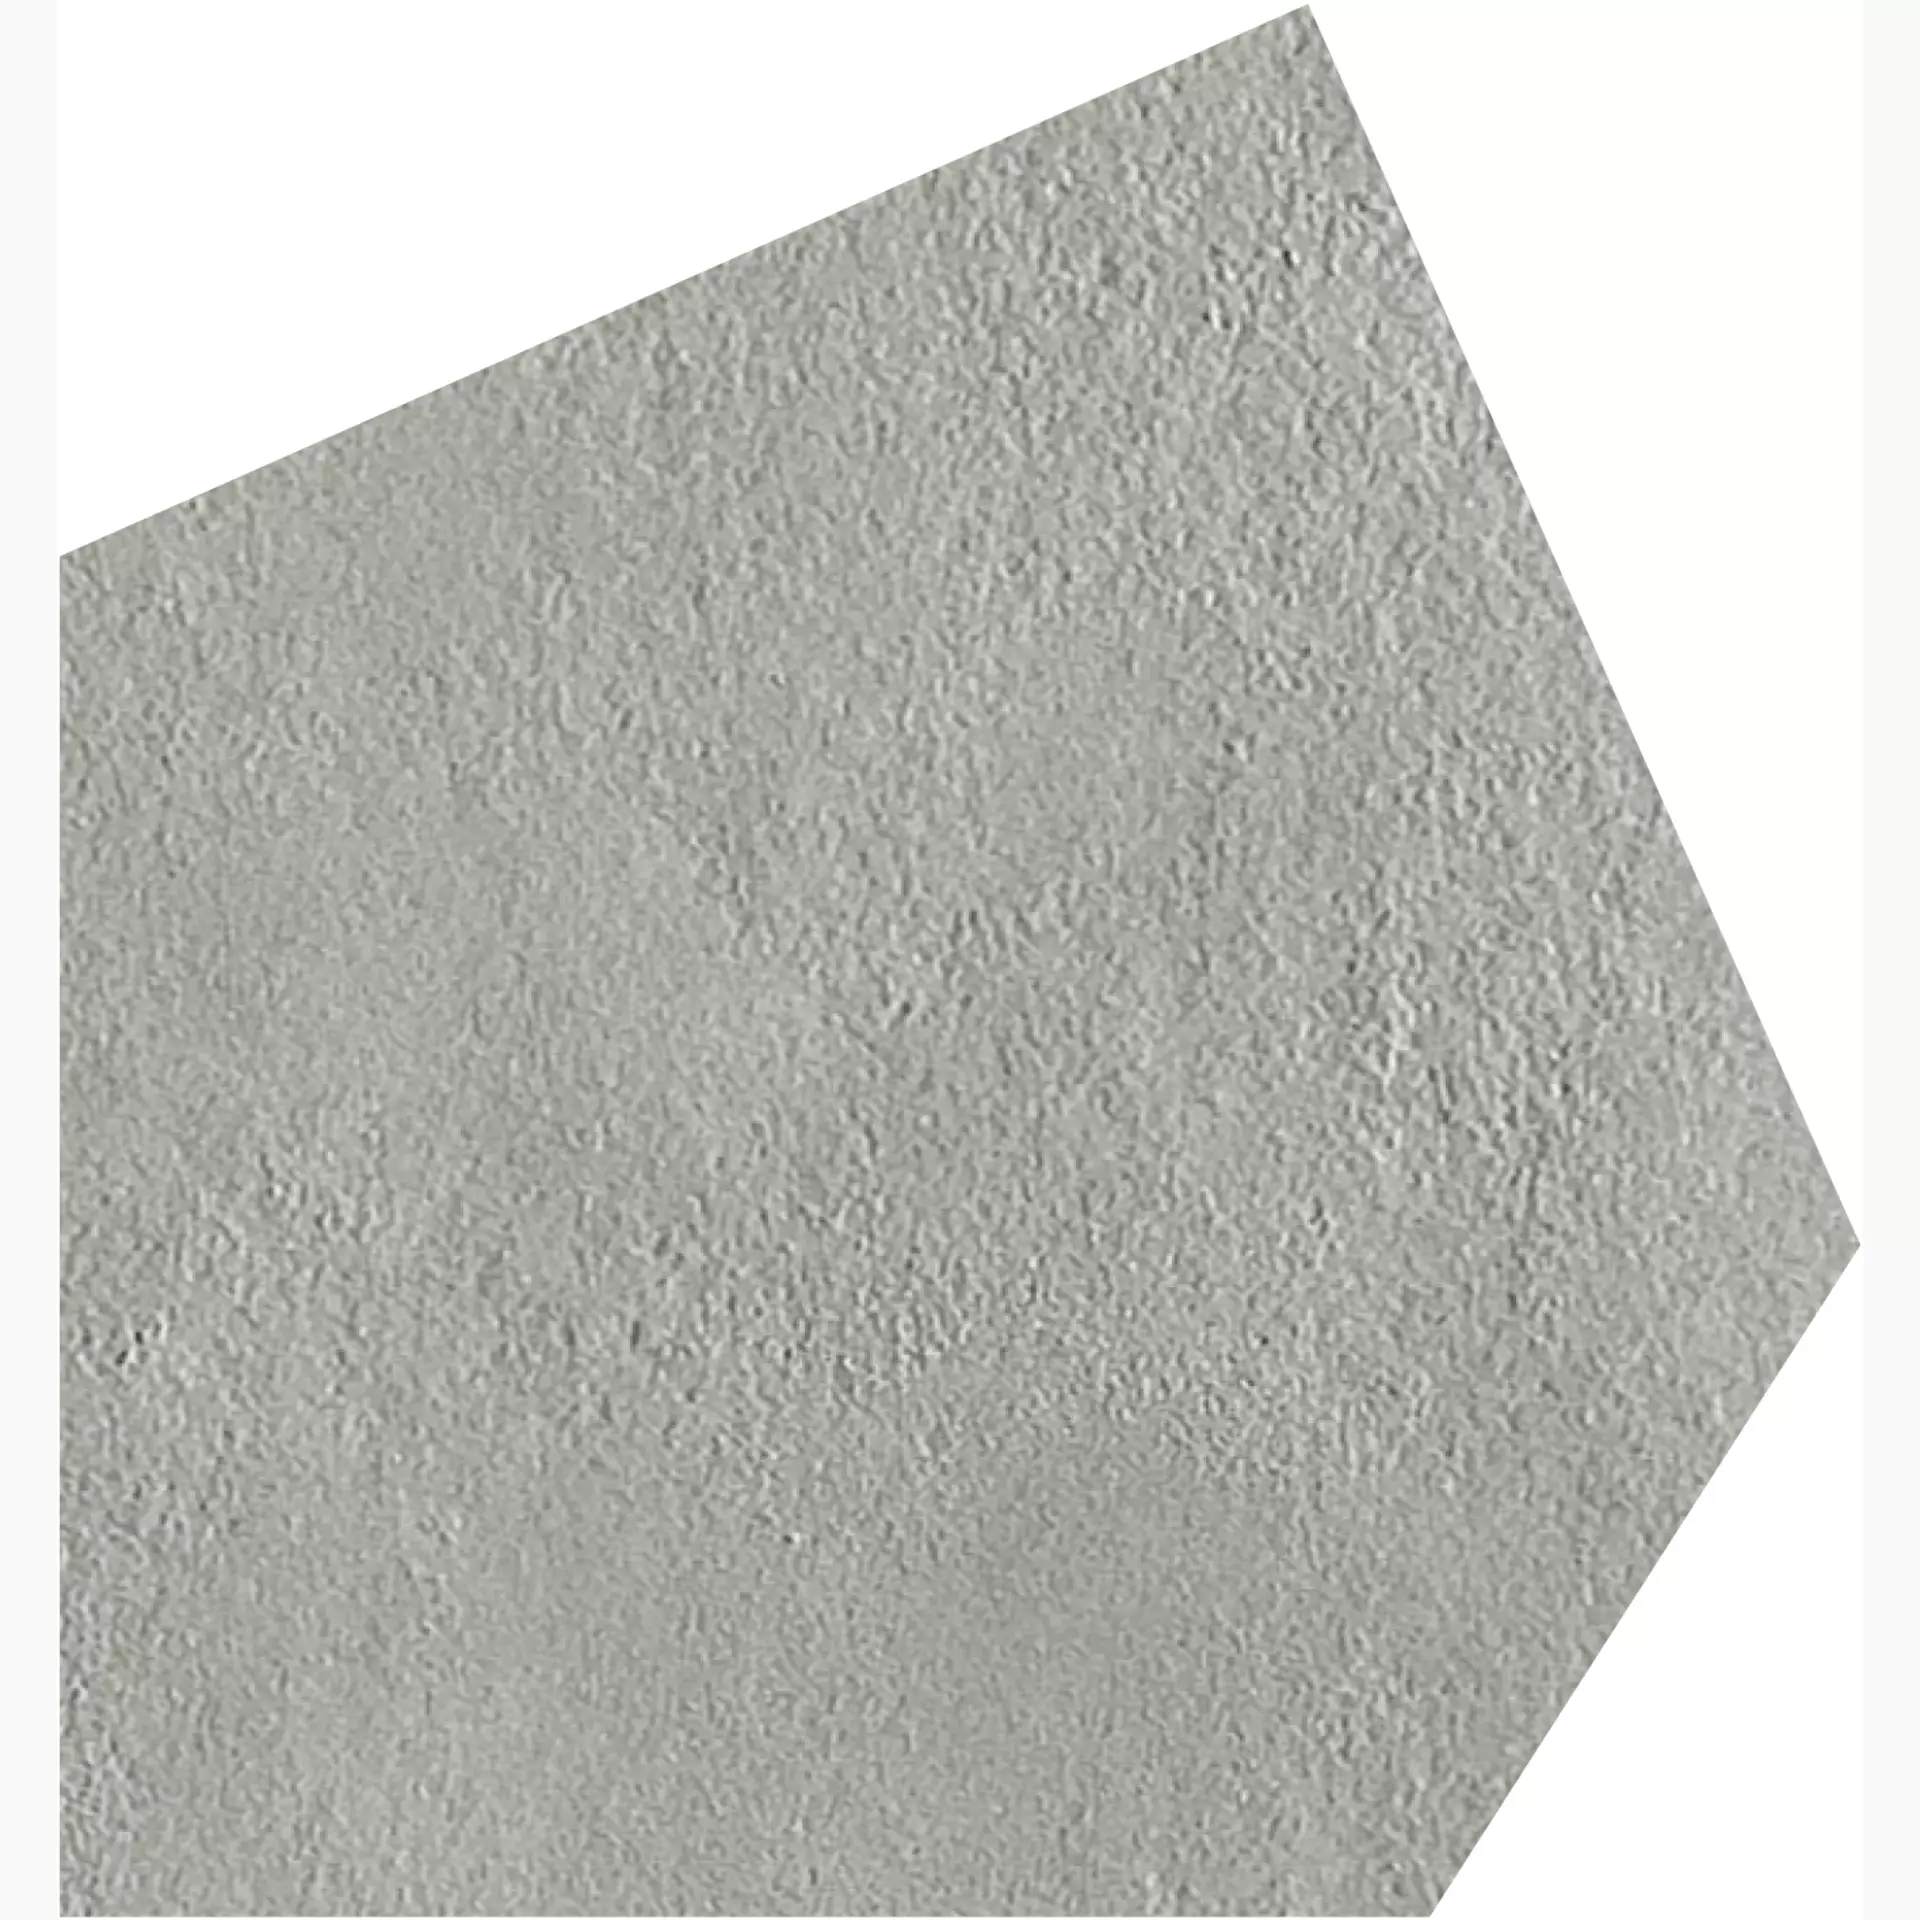 Gigacer Argilla Dry Material Decor Small Pentagon 6ARGPENTSDRY 10x17cm 6mm